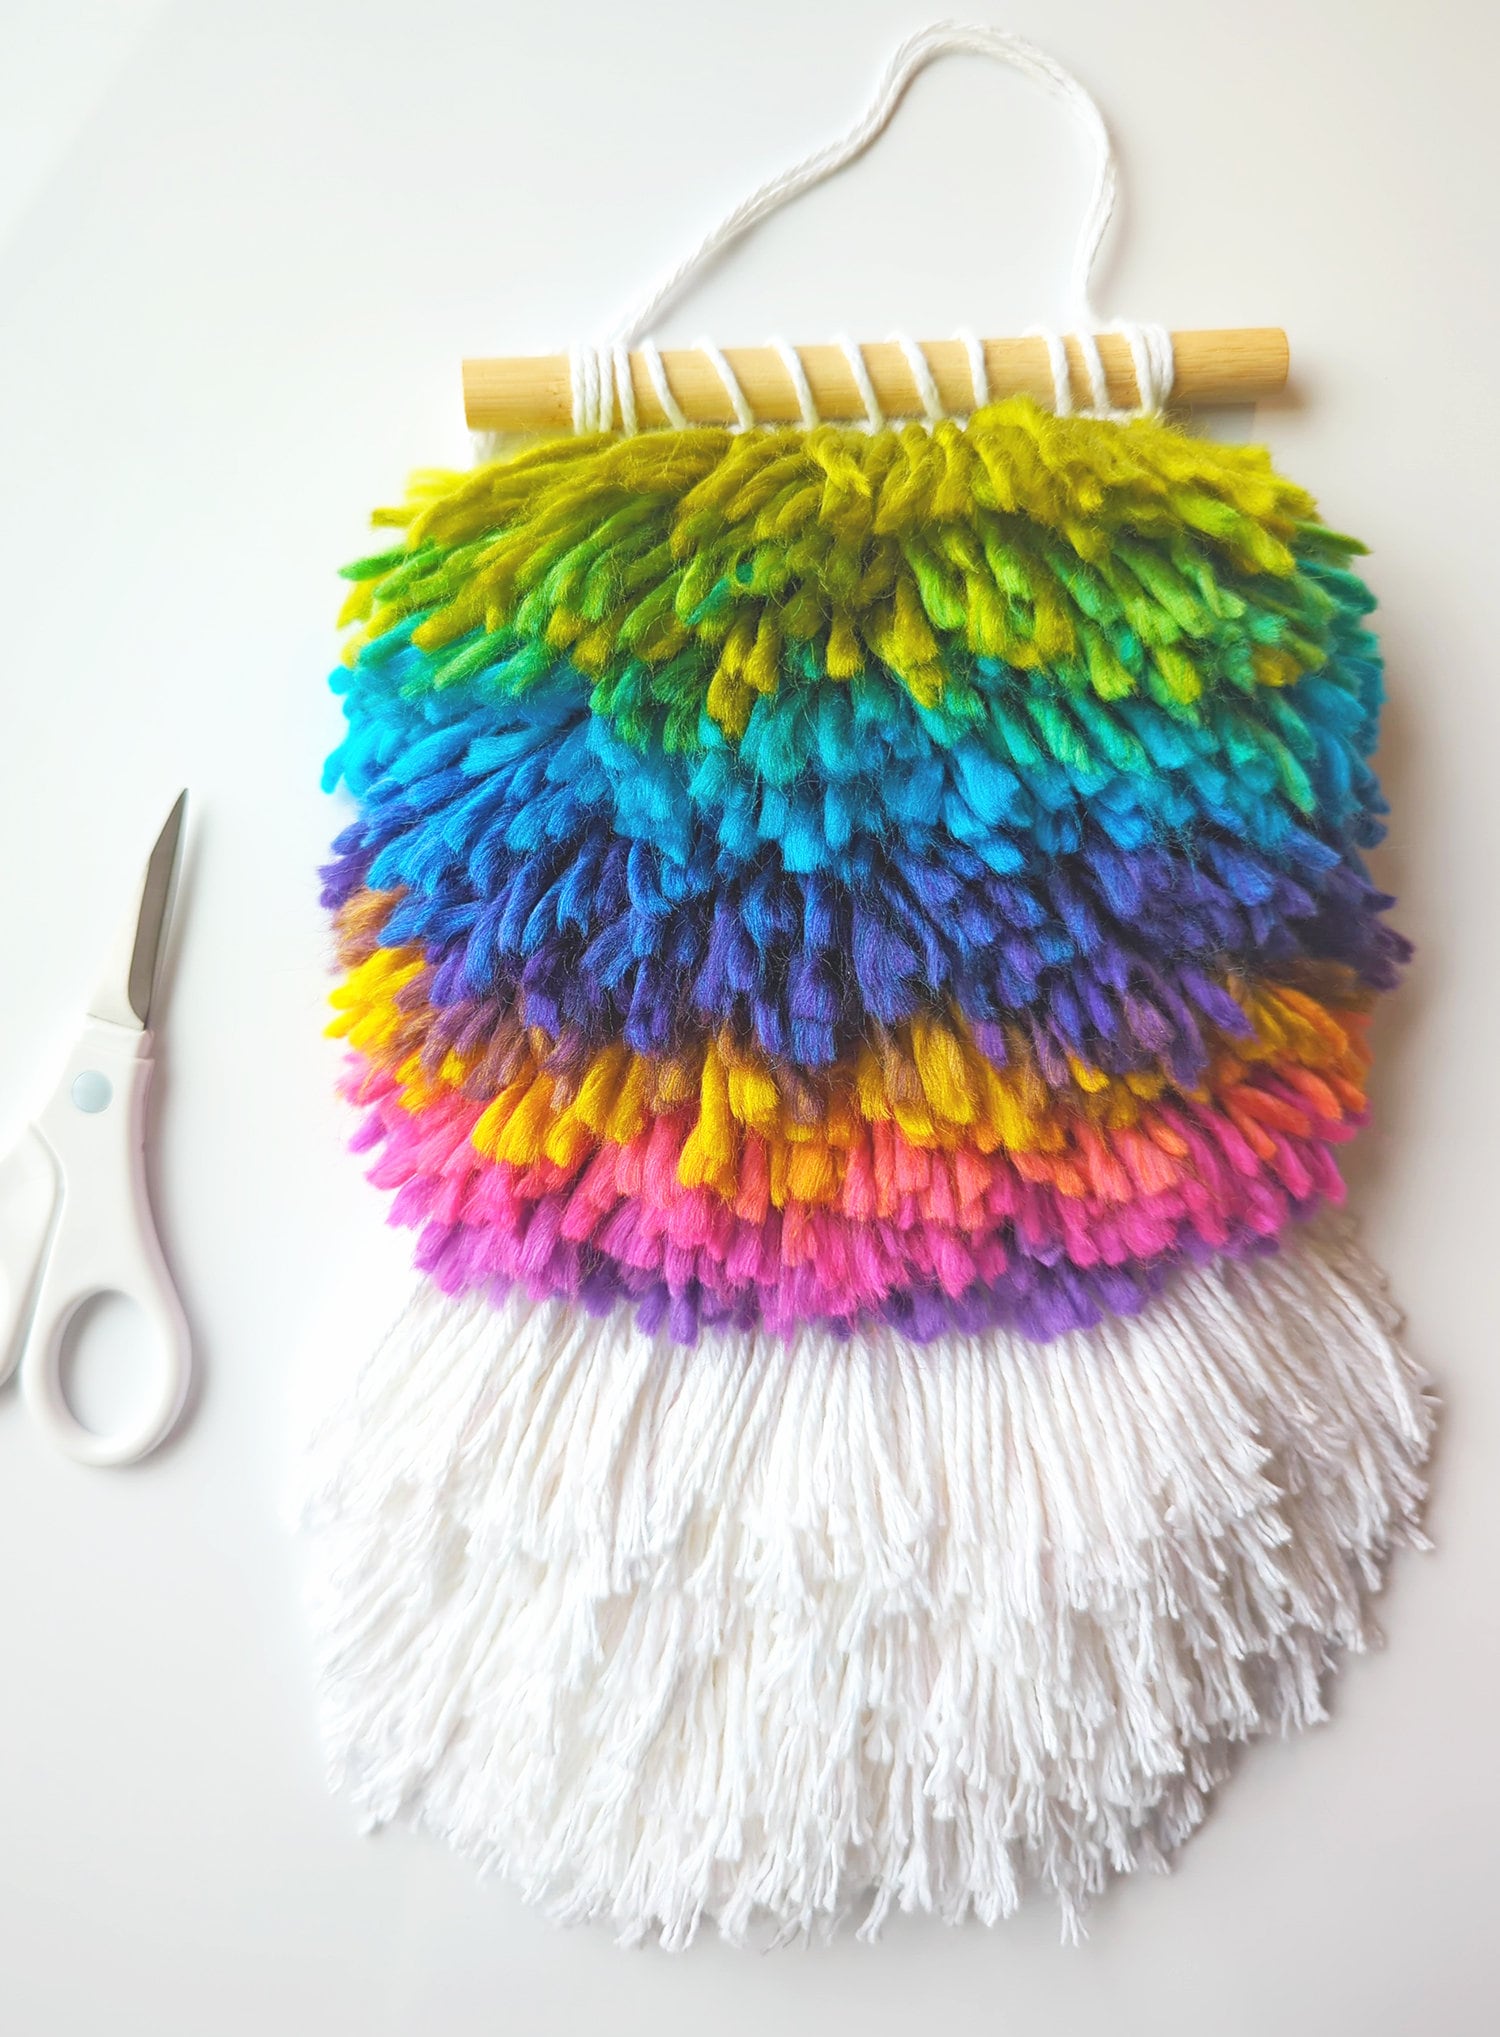 Latch Hook Rug Kits For Adults Kids Diy�Rug Crochet Yarn Kits